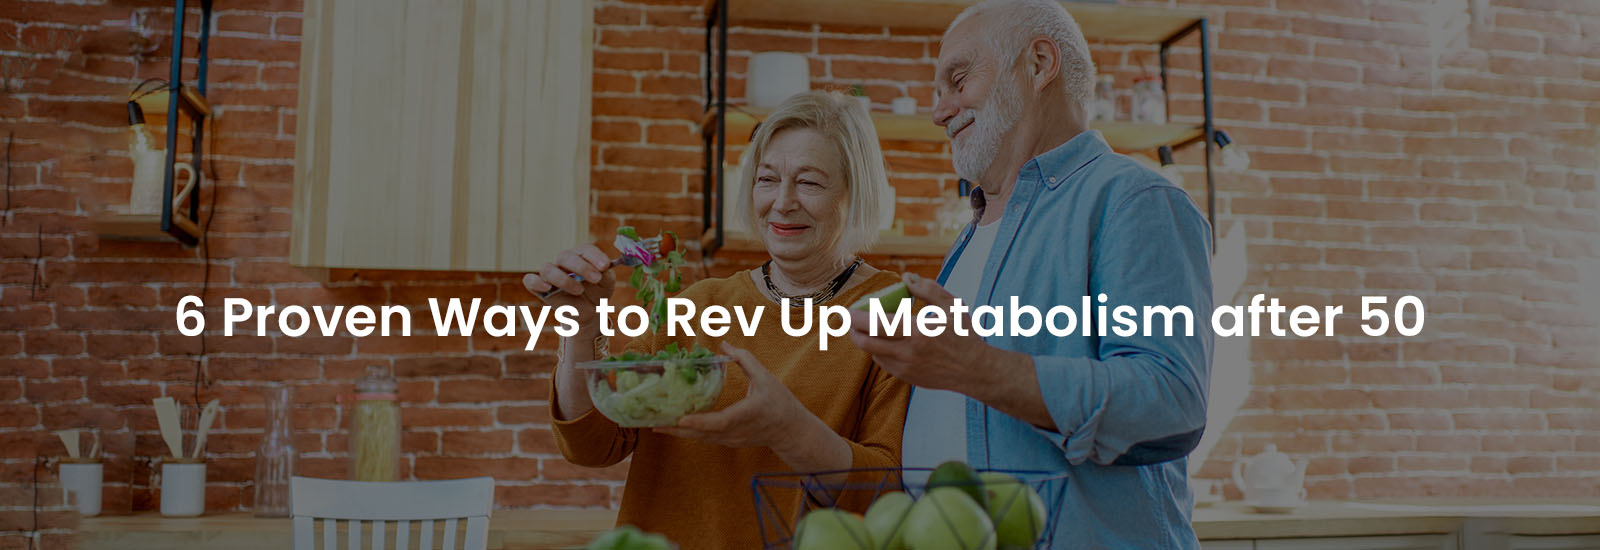 6 Proven Ways to Rev Up Metabolism After 50 | Banner Image